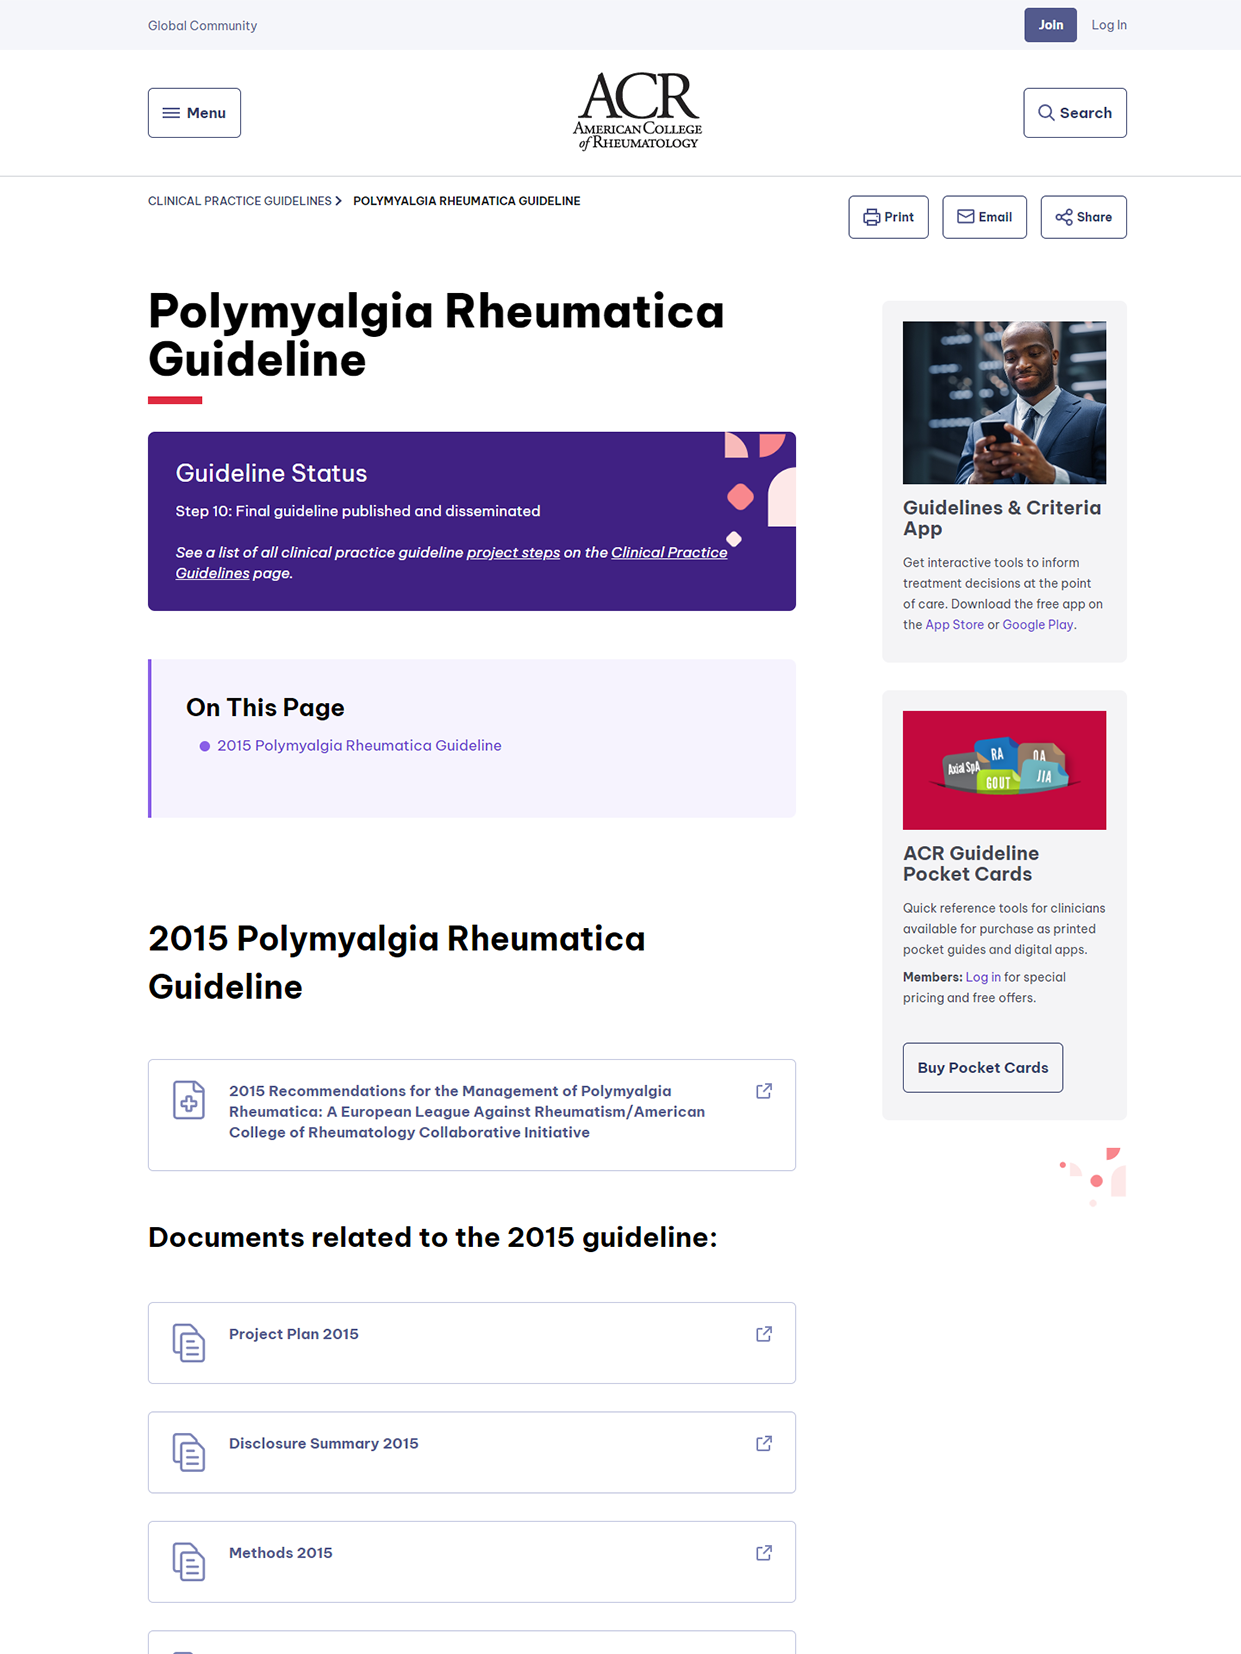 2015 Polymyalgia Rheumatica Guideline (ACR 2015)